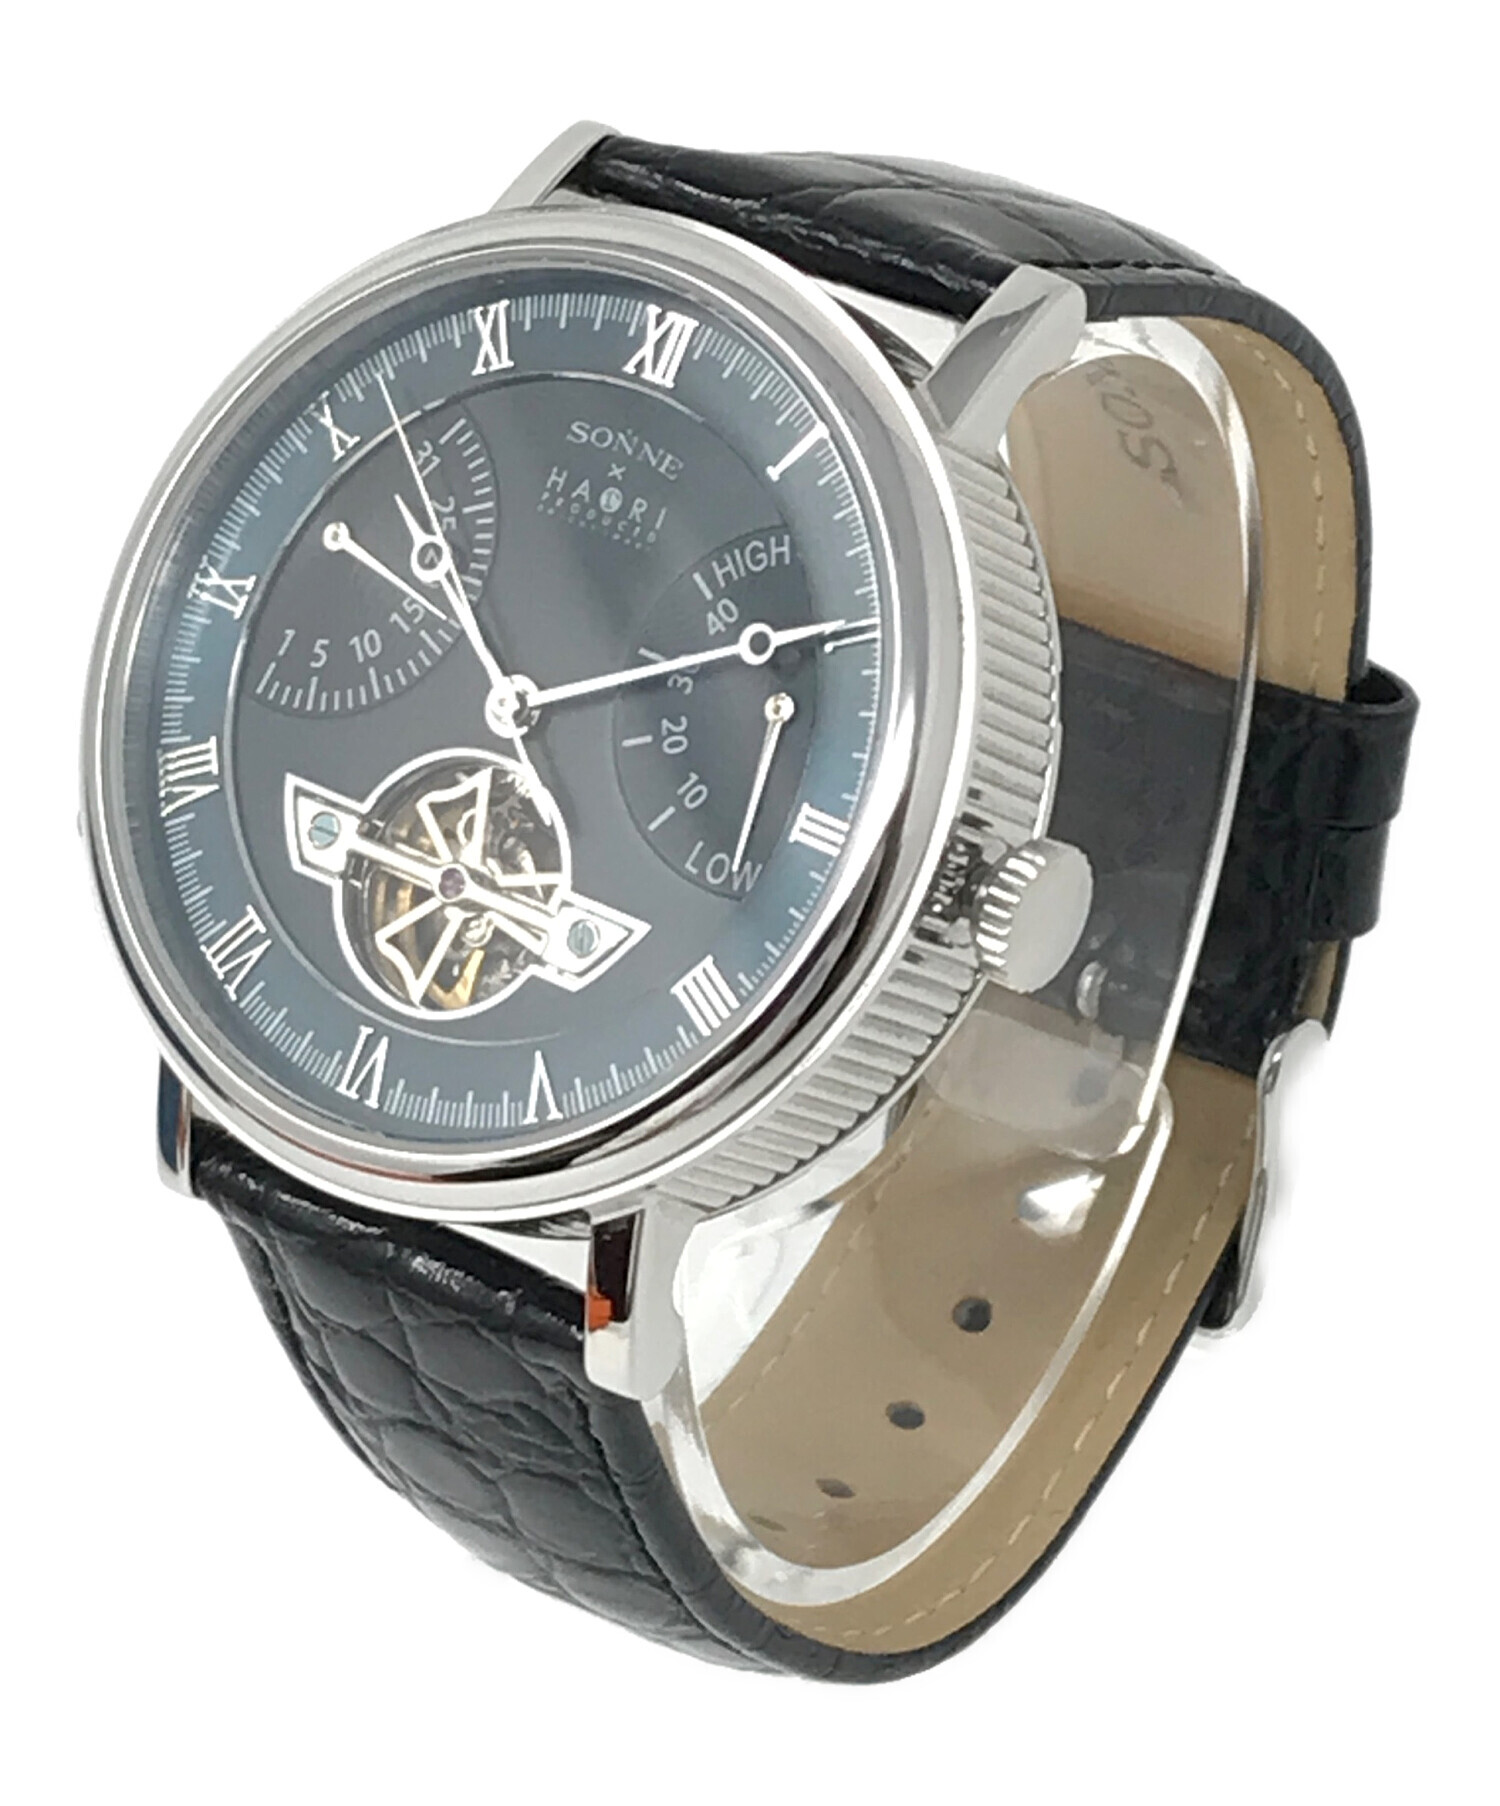 SONNE (ゾンネ) HAORI (ハオリ) 腕時計 自動巻き サイズ:実寸サイズにてご確認ください。